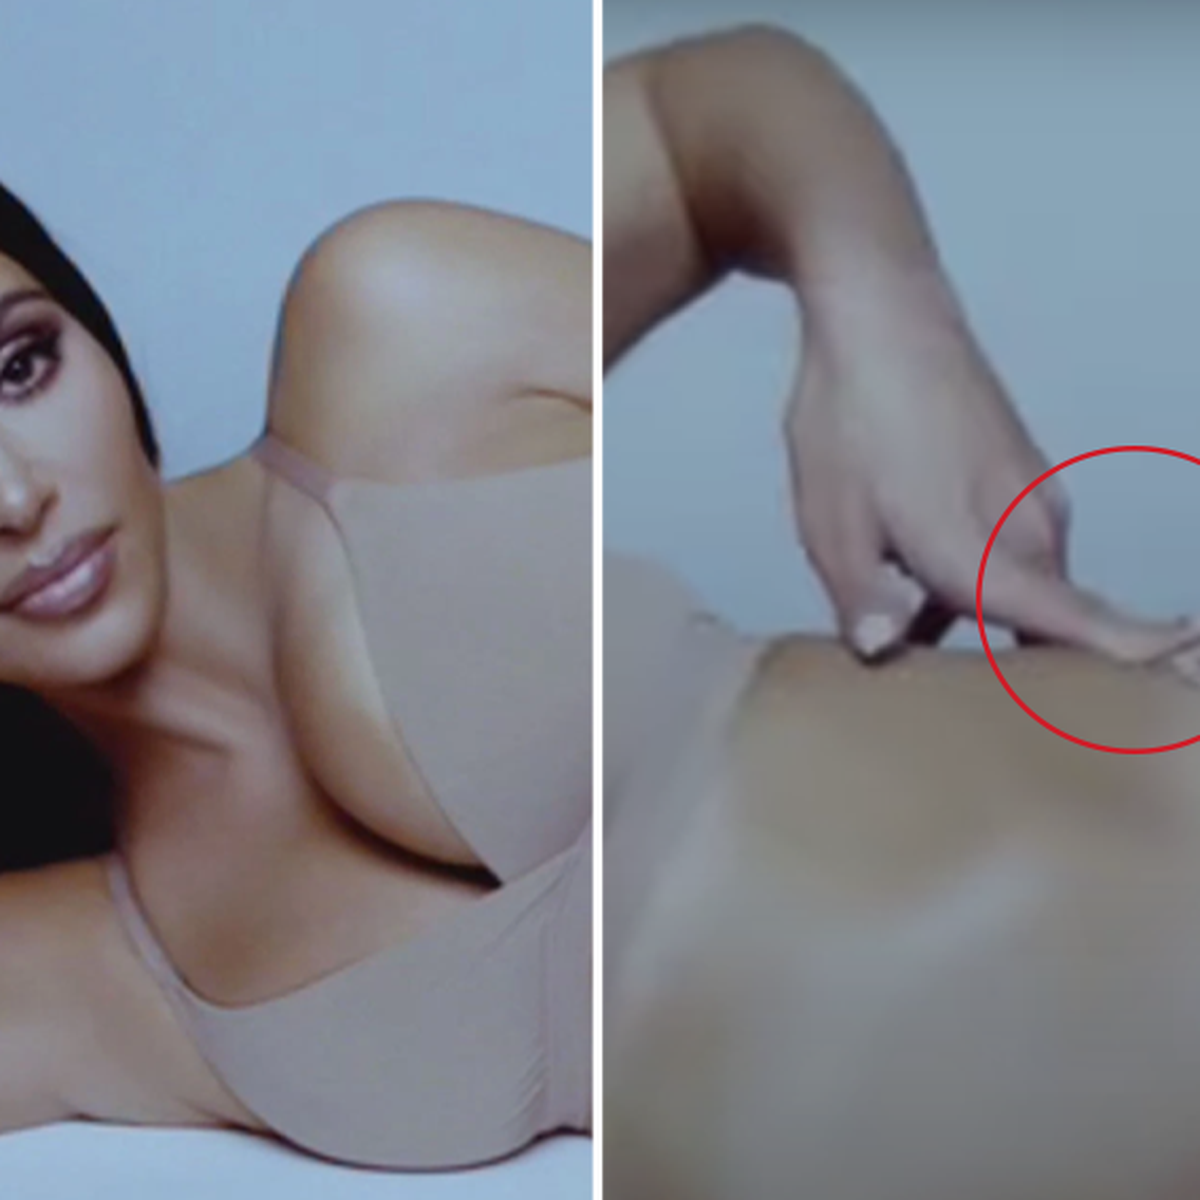 Kim Kardashian's Skims ad did not edit her waist